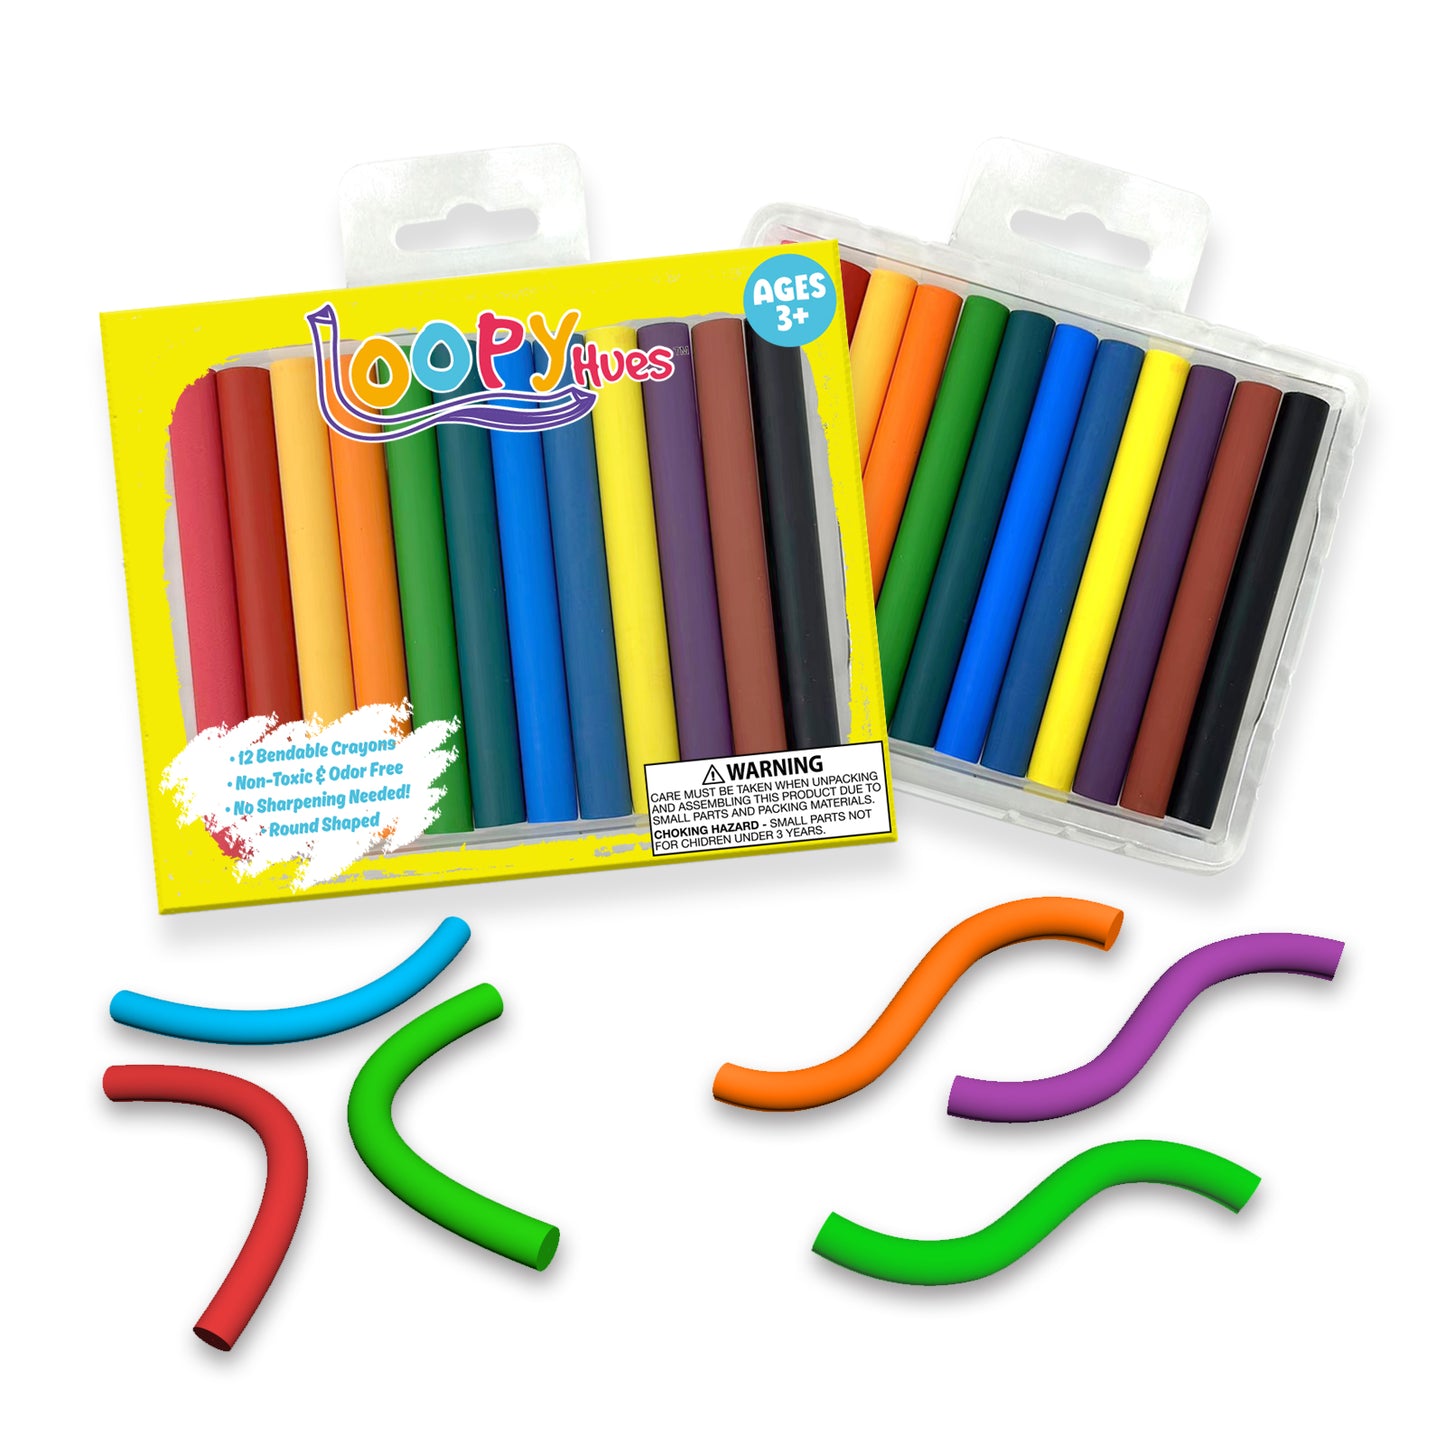 Loopy Hues - Bendable & 3D Shaped Crayons